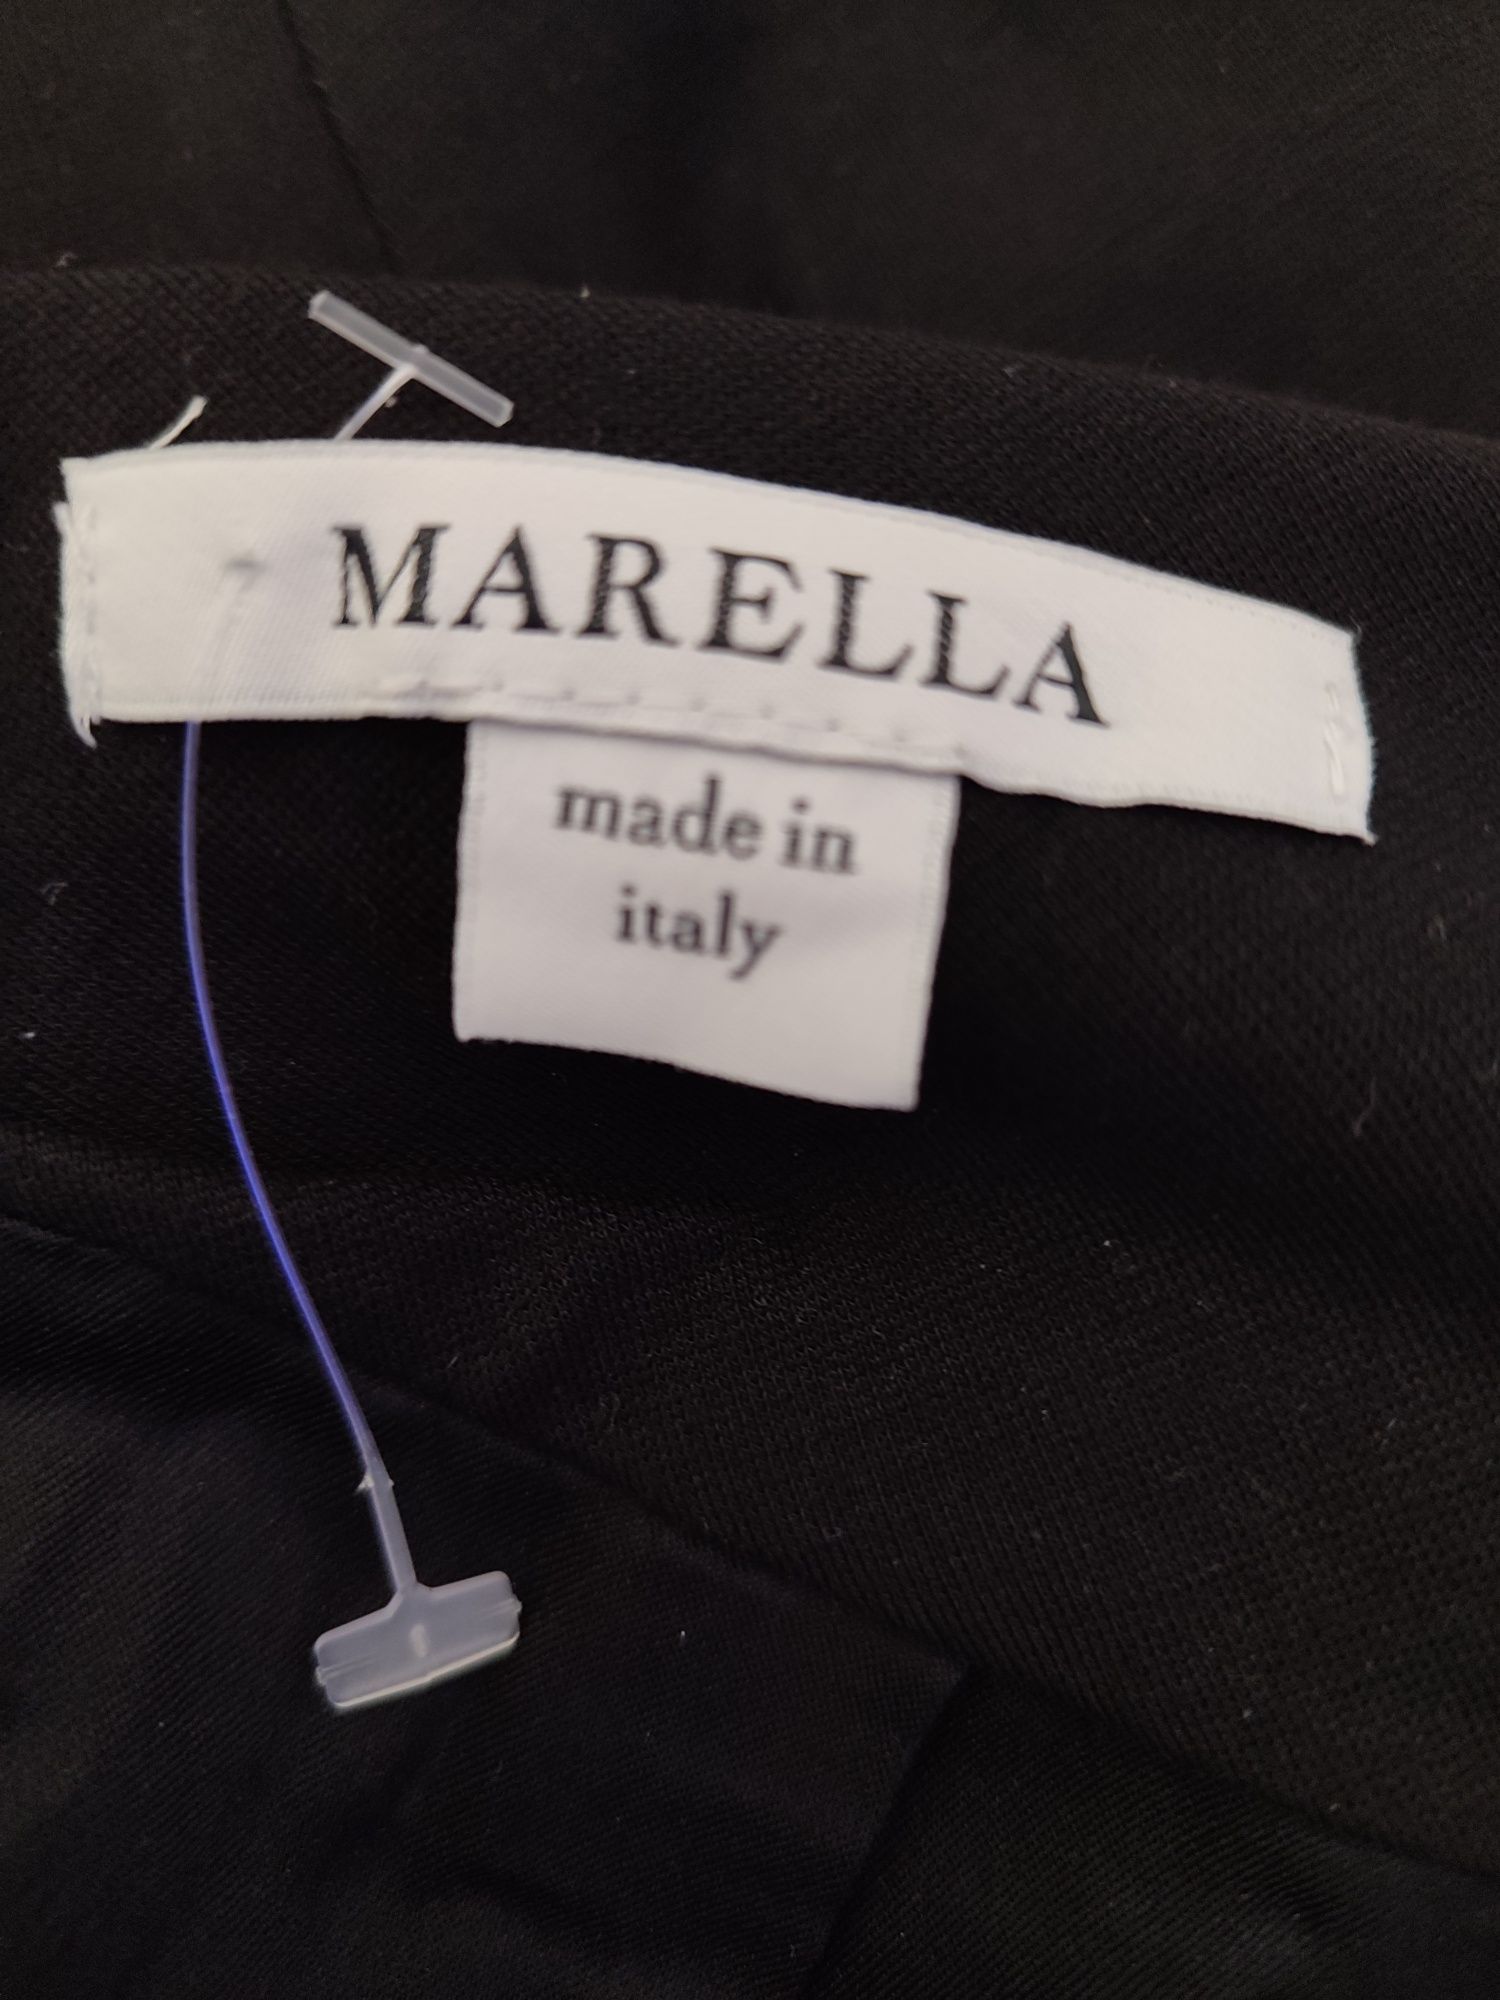 Marella-Made in Italy-36S